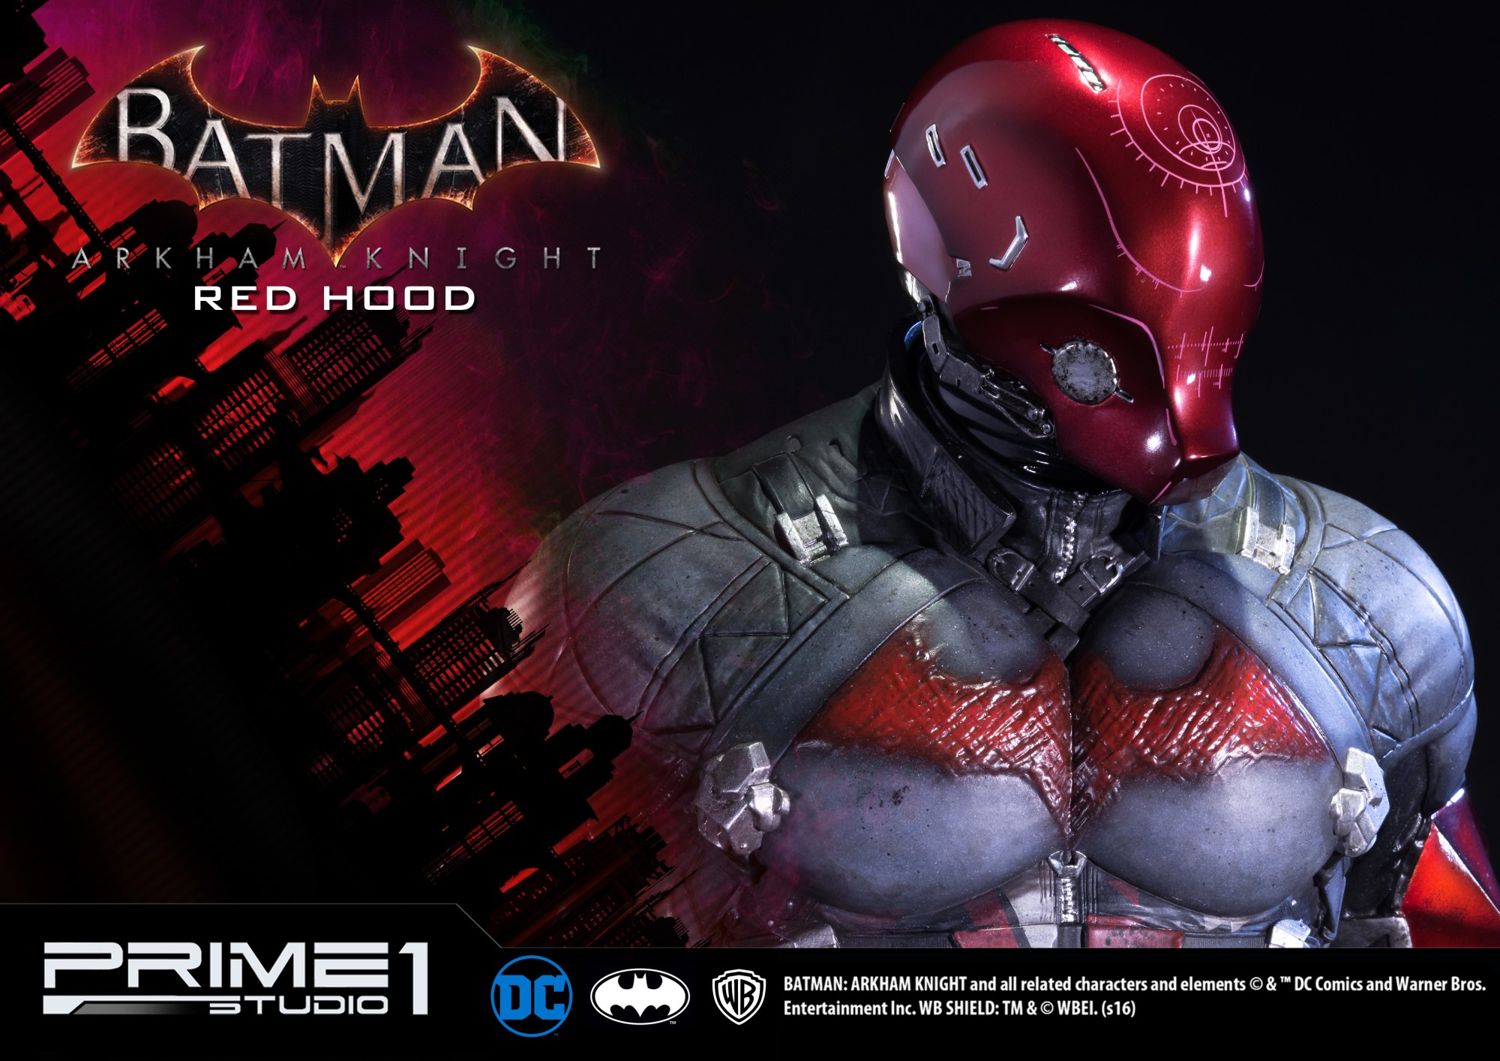 Museum Masterline Batman: Prime Knight 1 Red Hood Arkham | Studio 